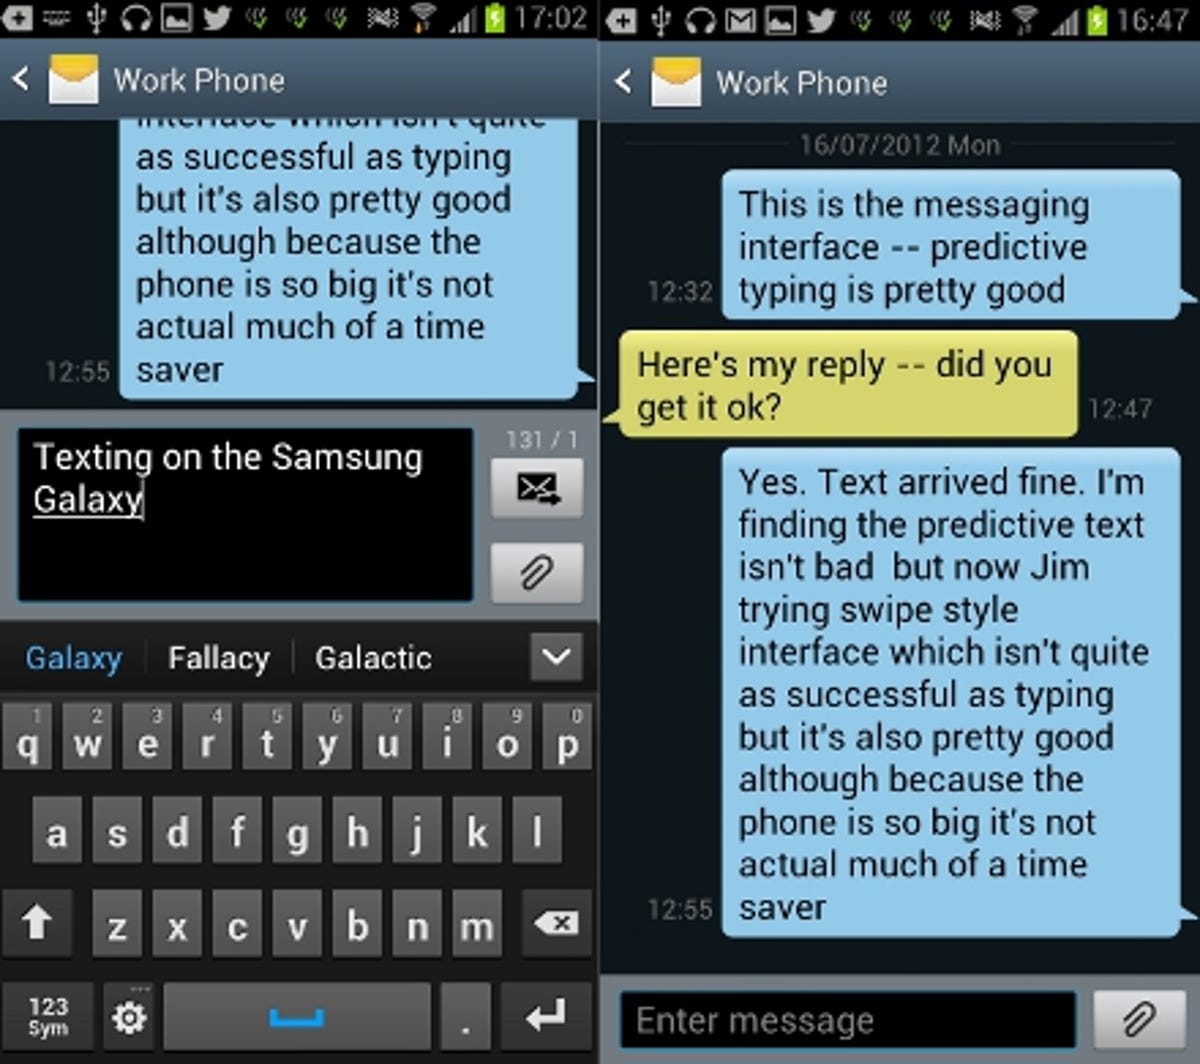 Samsung Galaxy S3 messaging